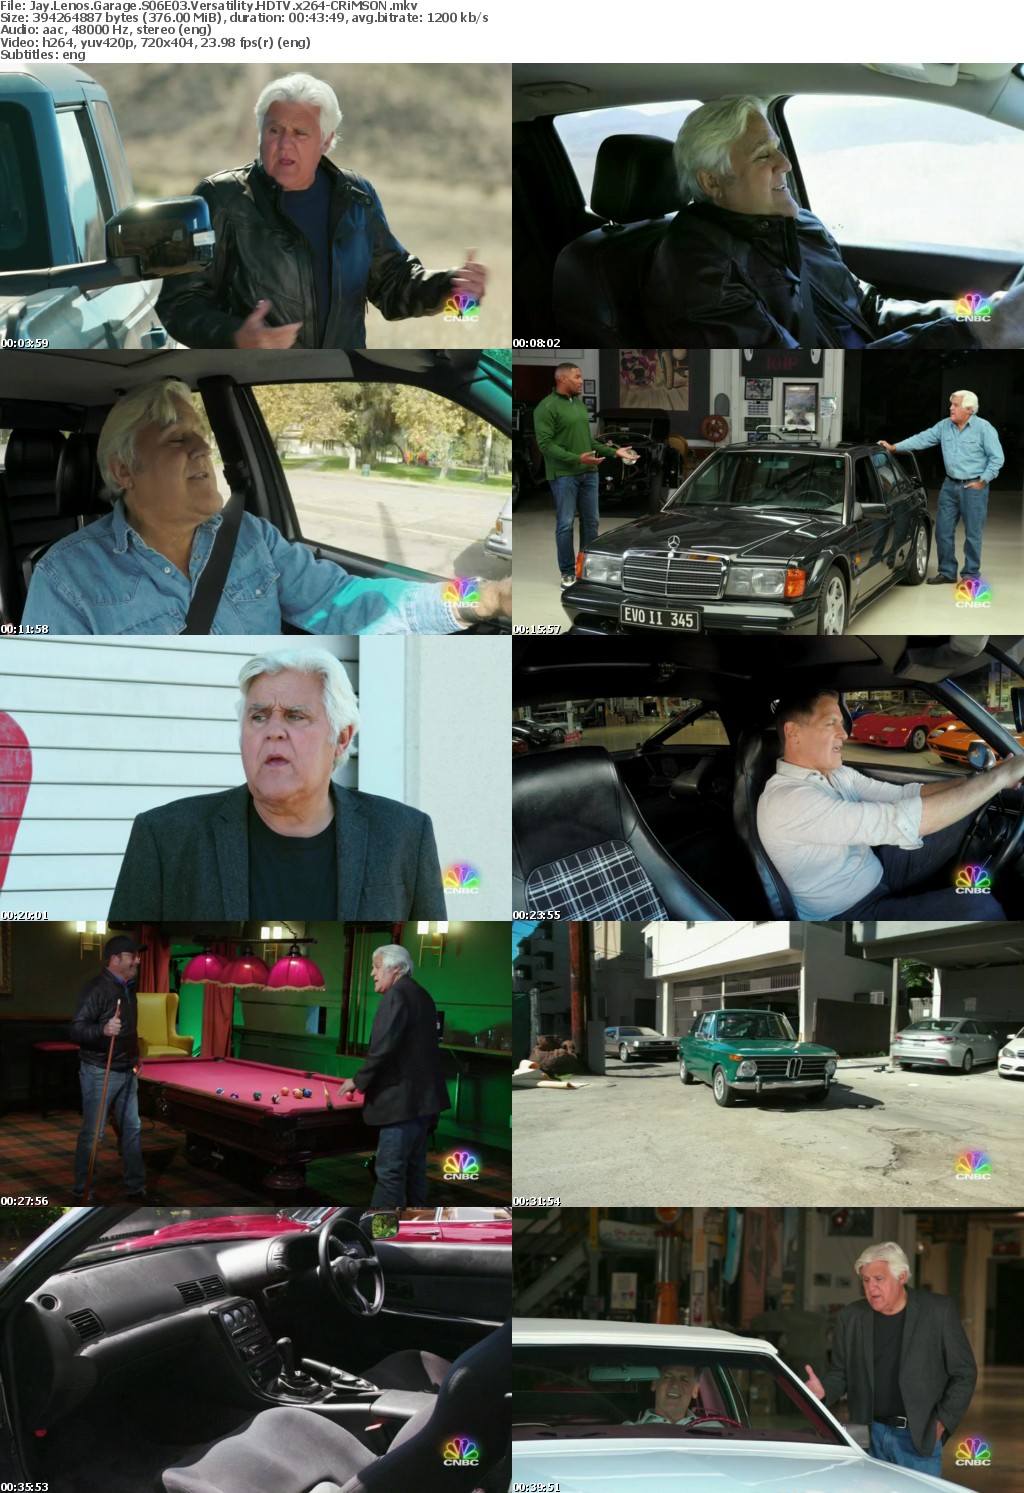 Jay Lenos Garage S06E03 Versatility HDTV x264-CRiMSON